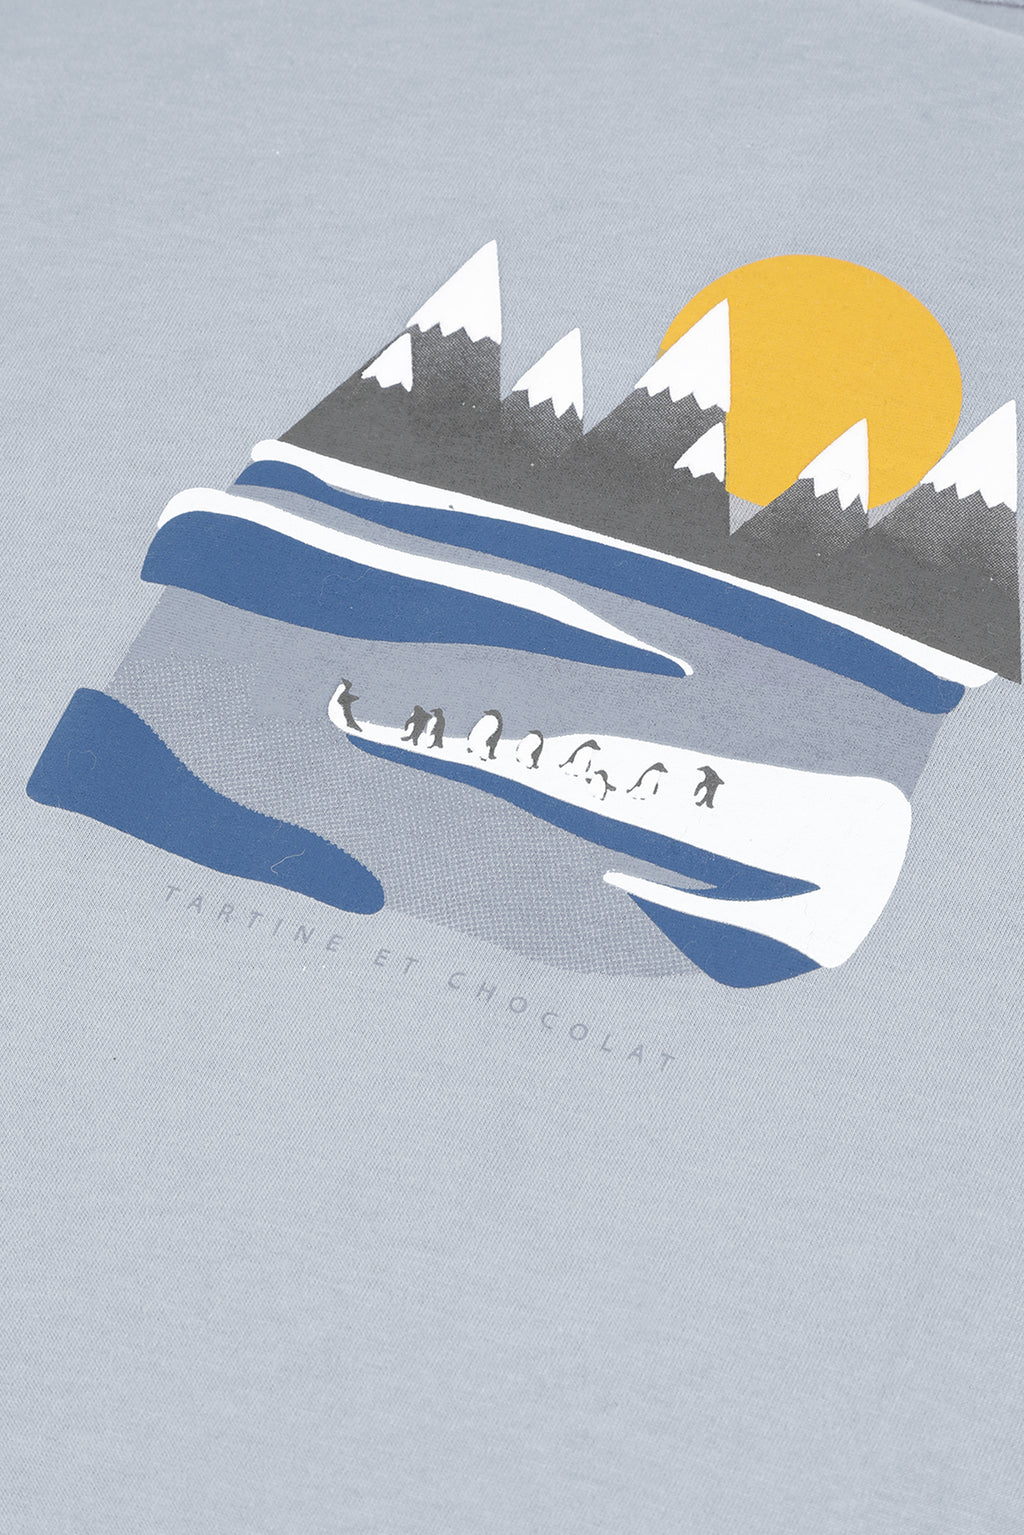 T-shirt - Grey North Pole Illustration